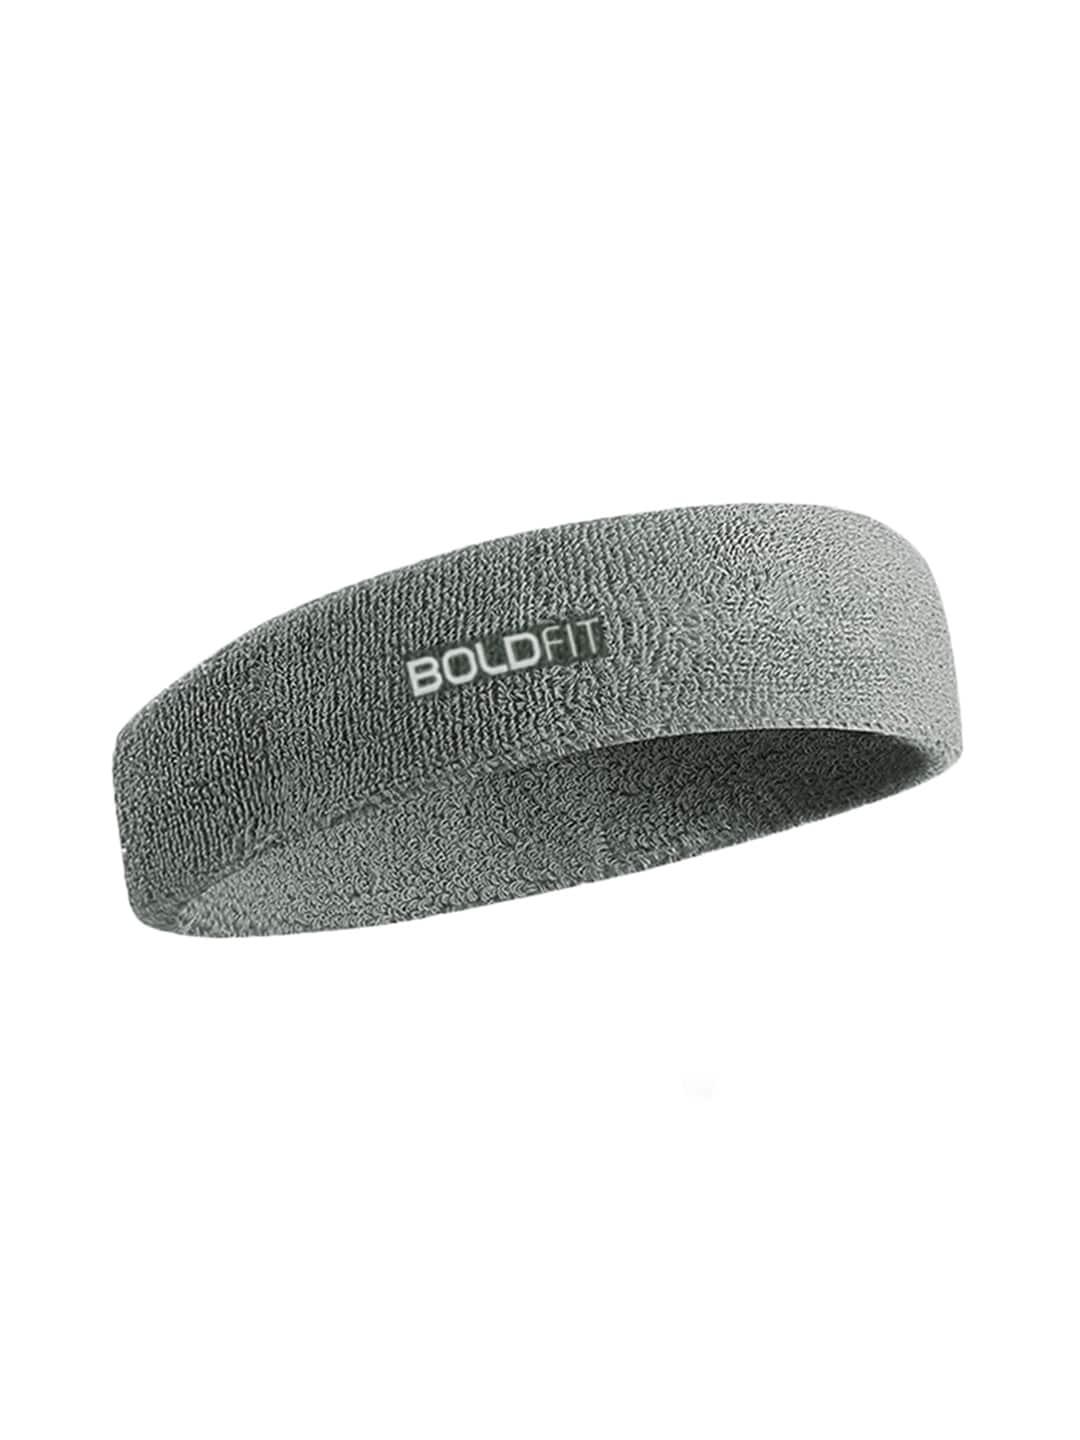 boldfit grey solid non-slip headband